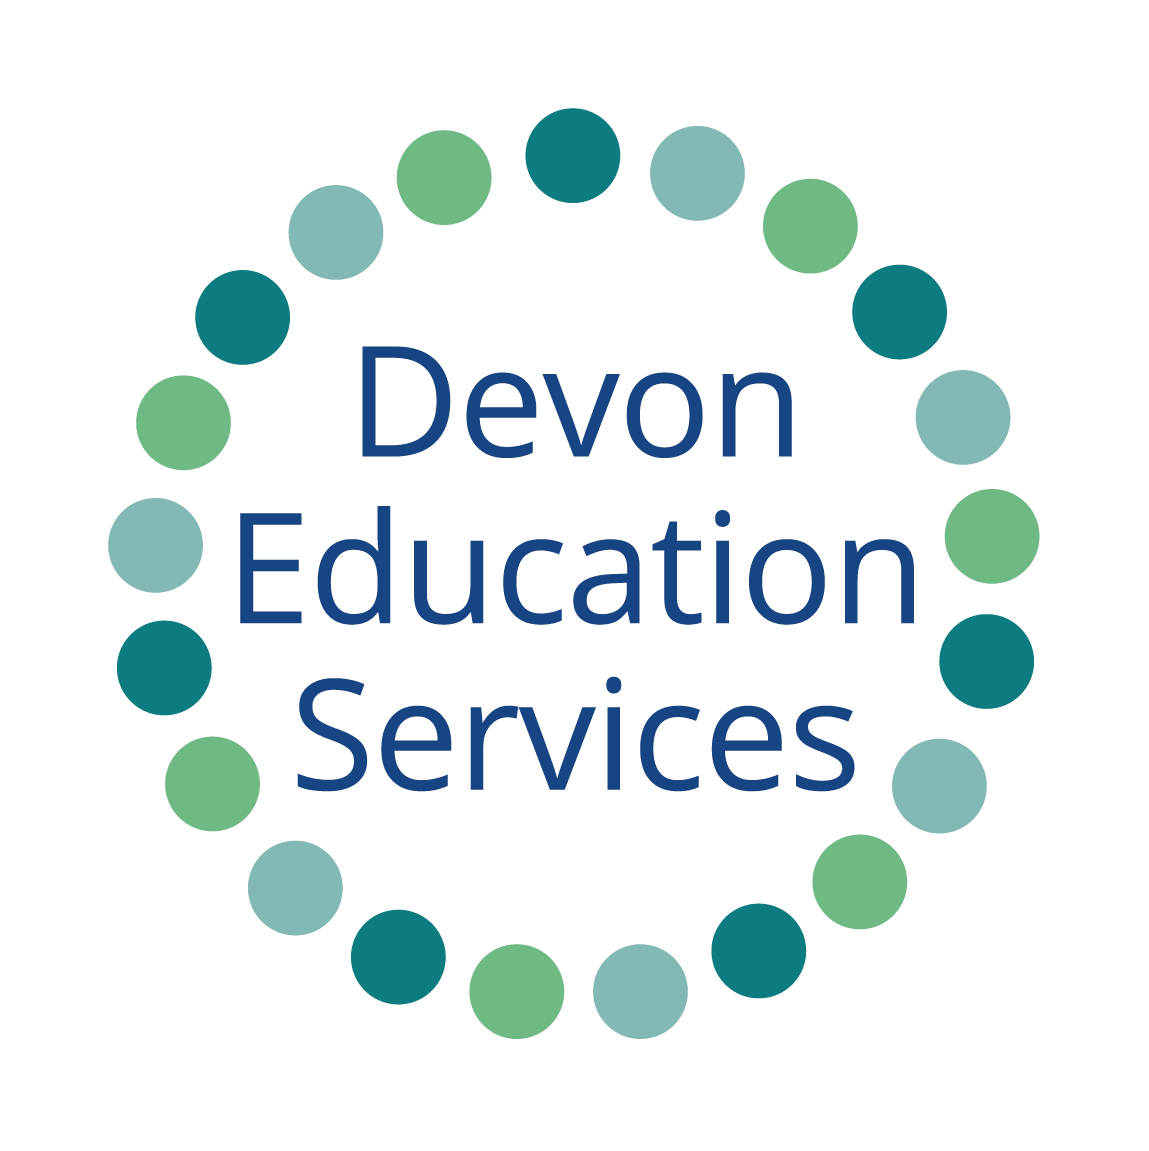 Devon Education Services logo 